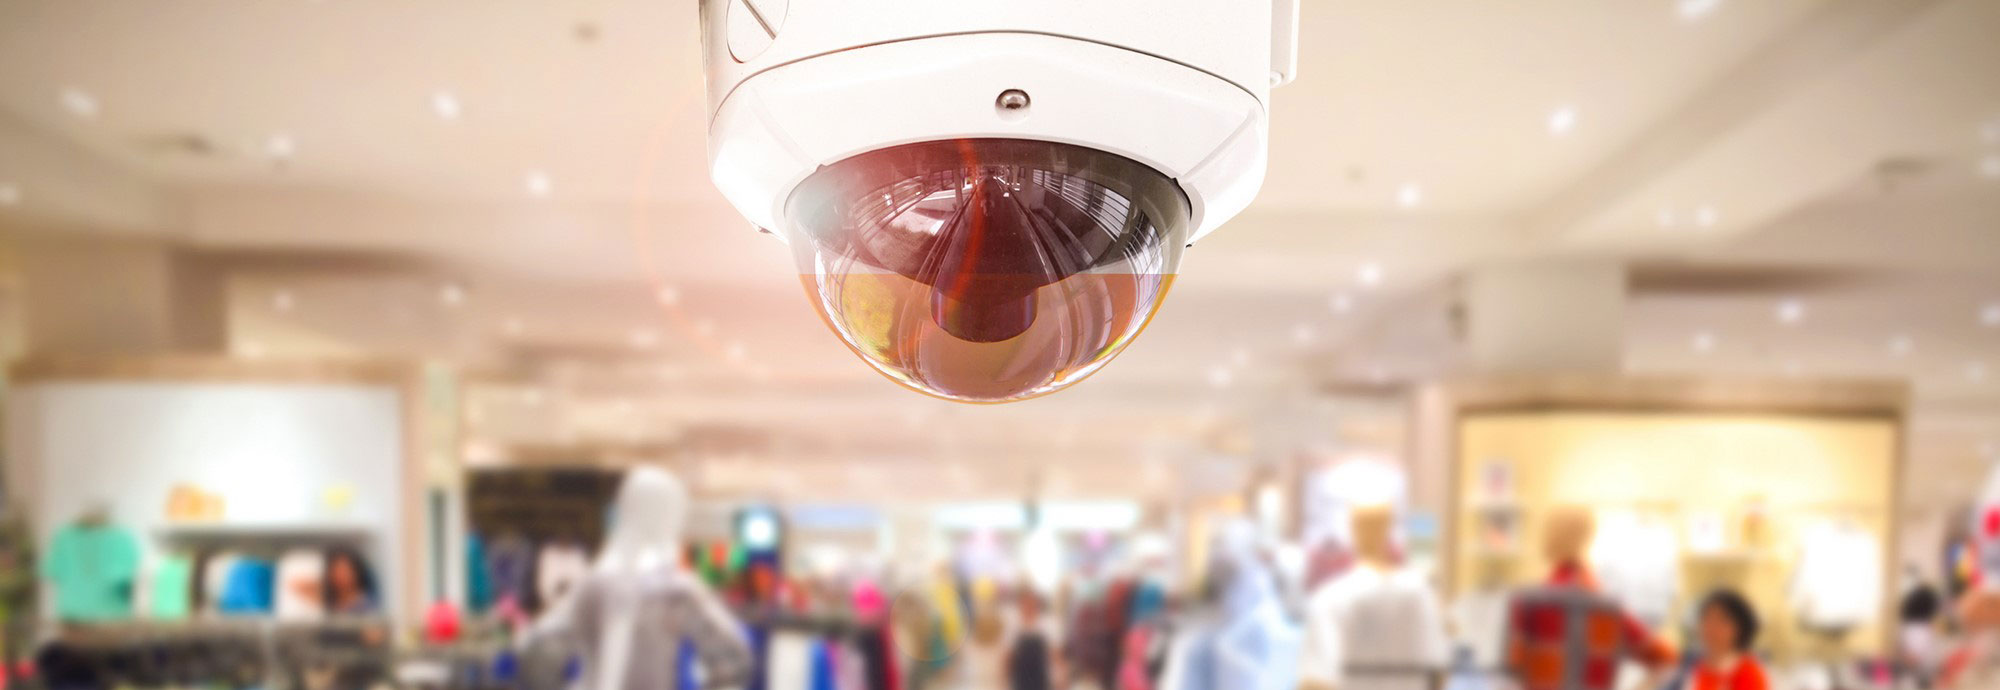 Caméras de surveillance magasin